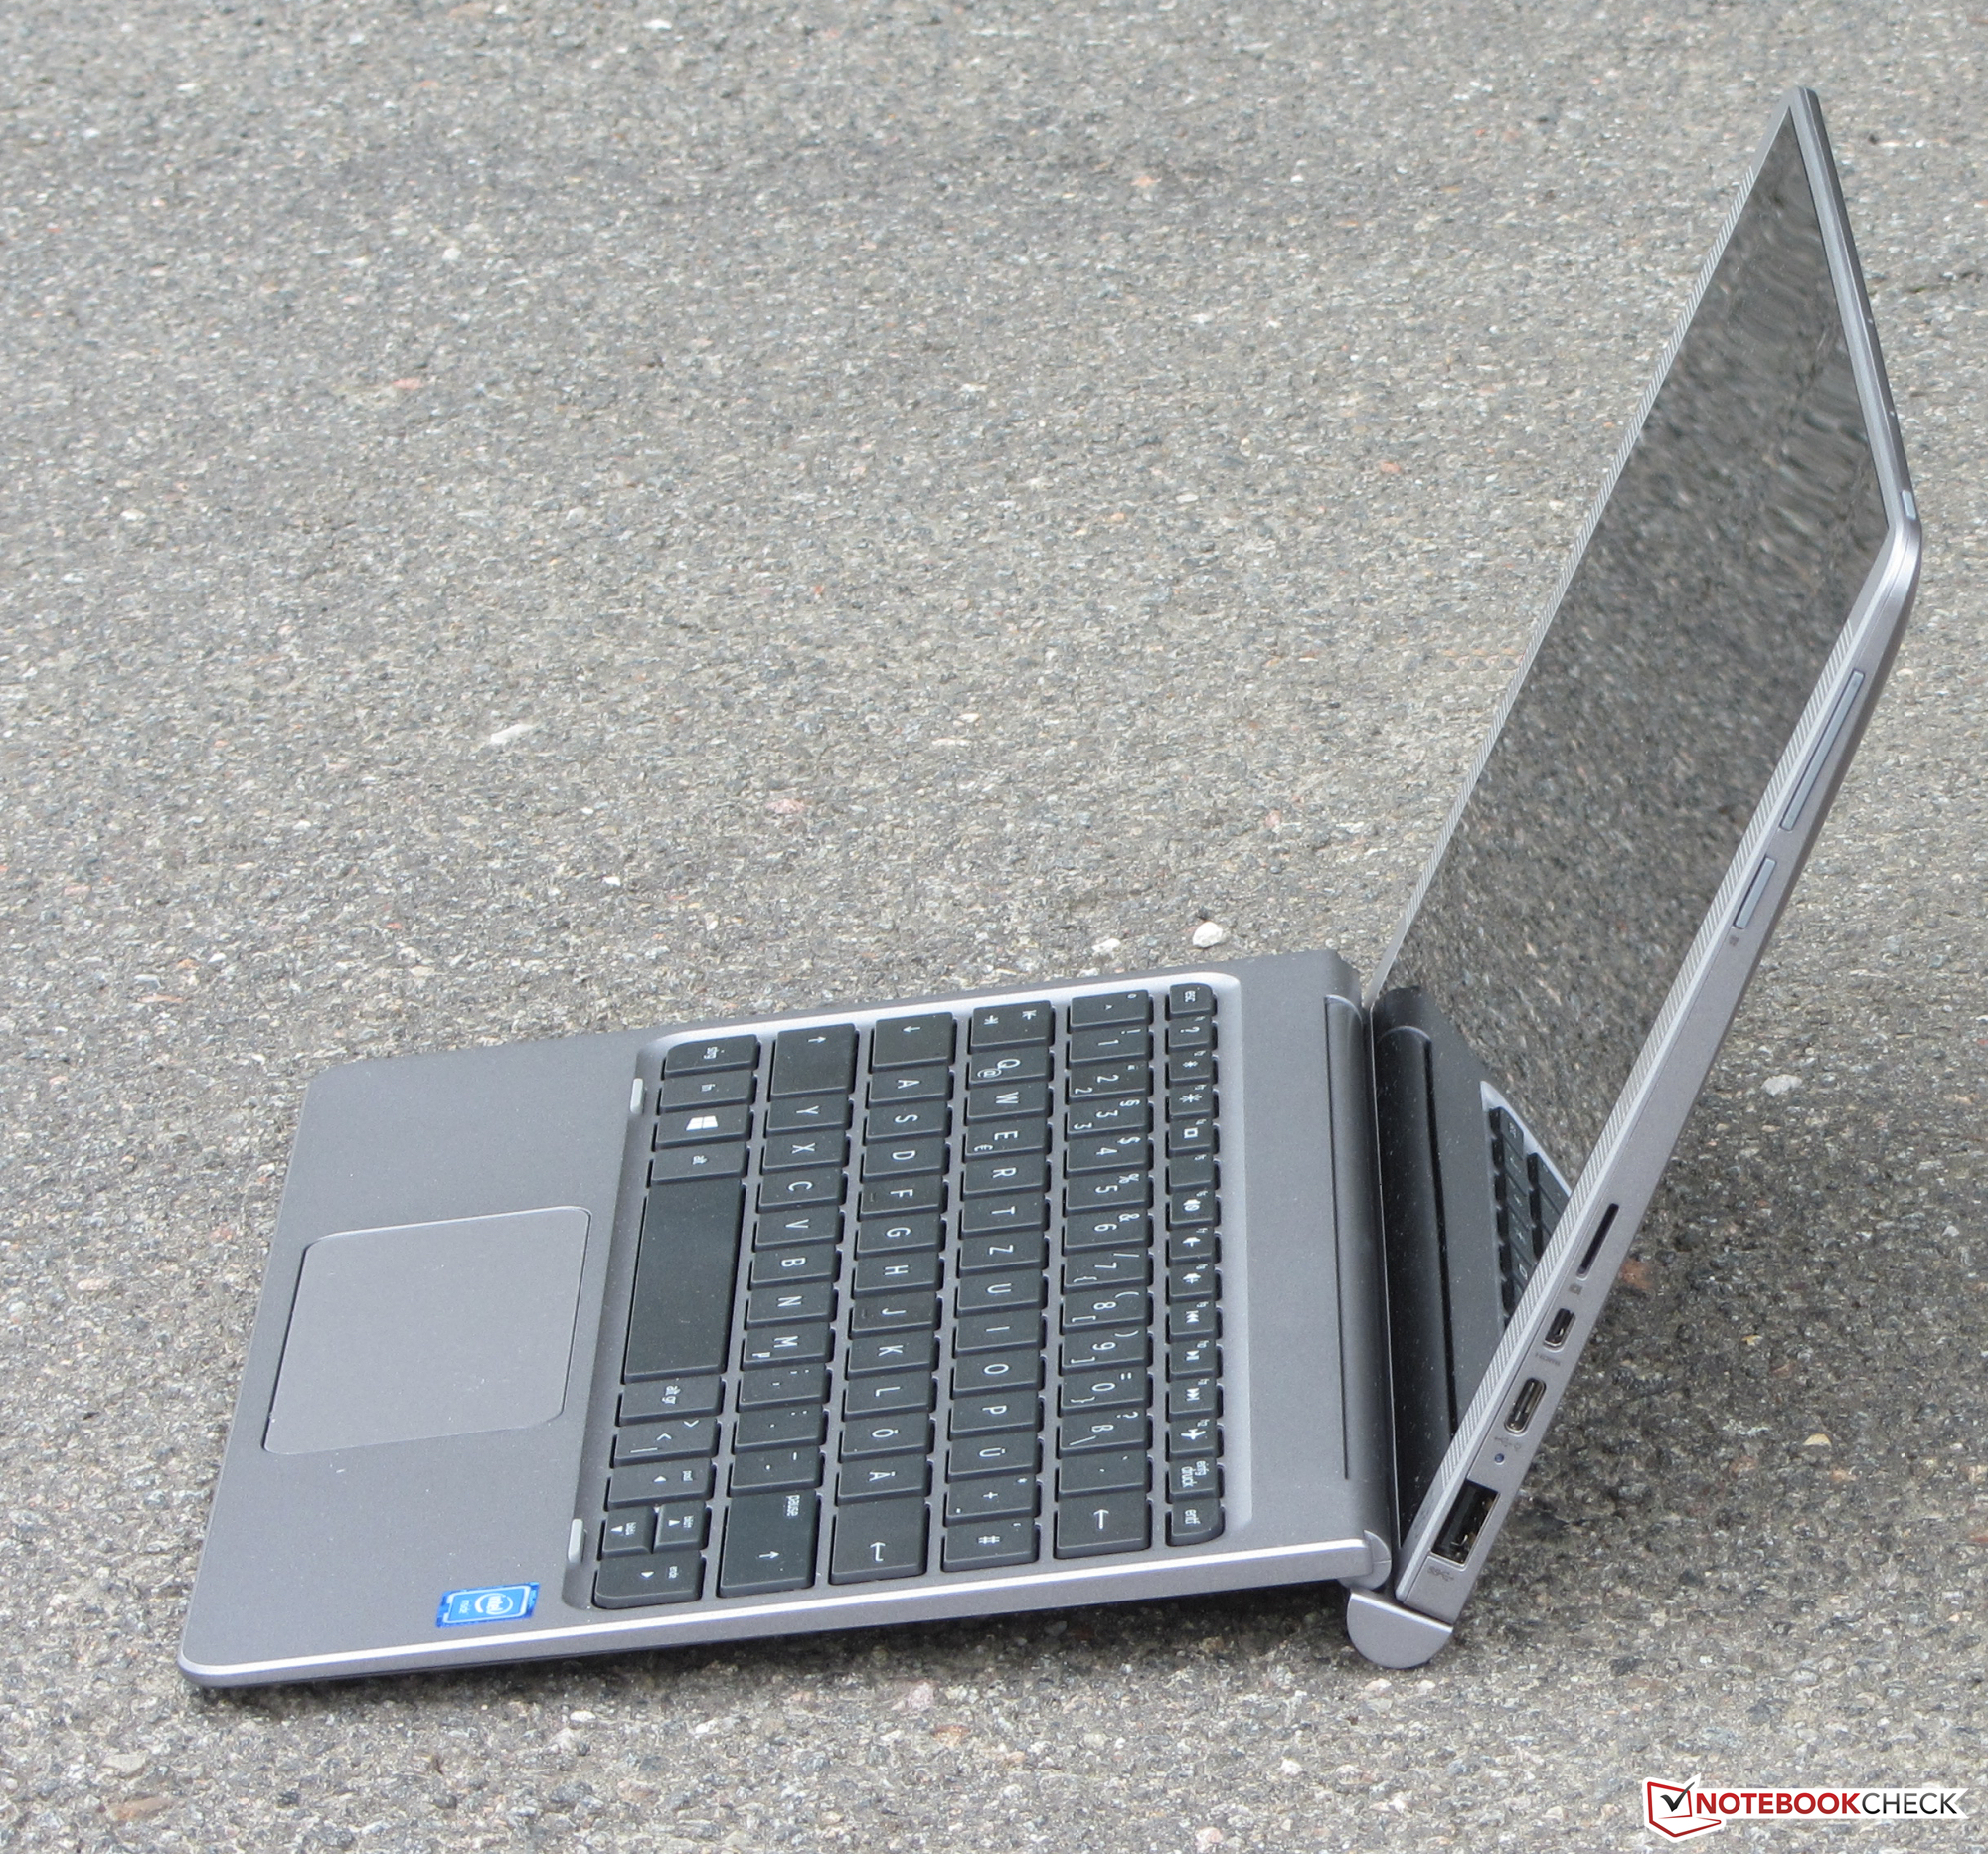 HP x2 210 G1 Convertible Review - NotebookCheck.net Reviews